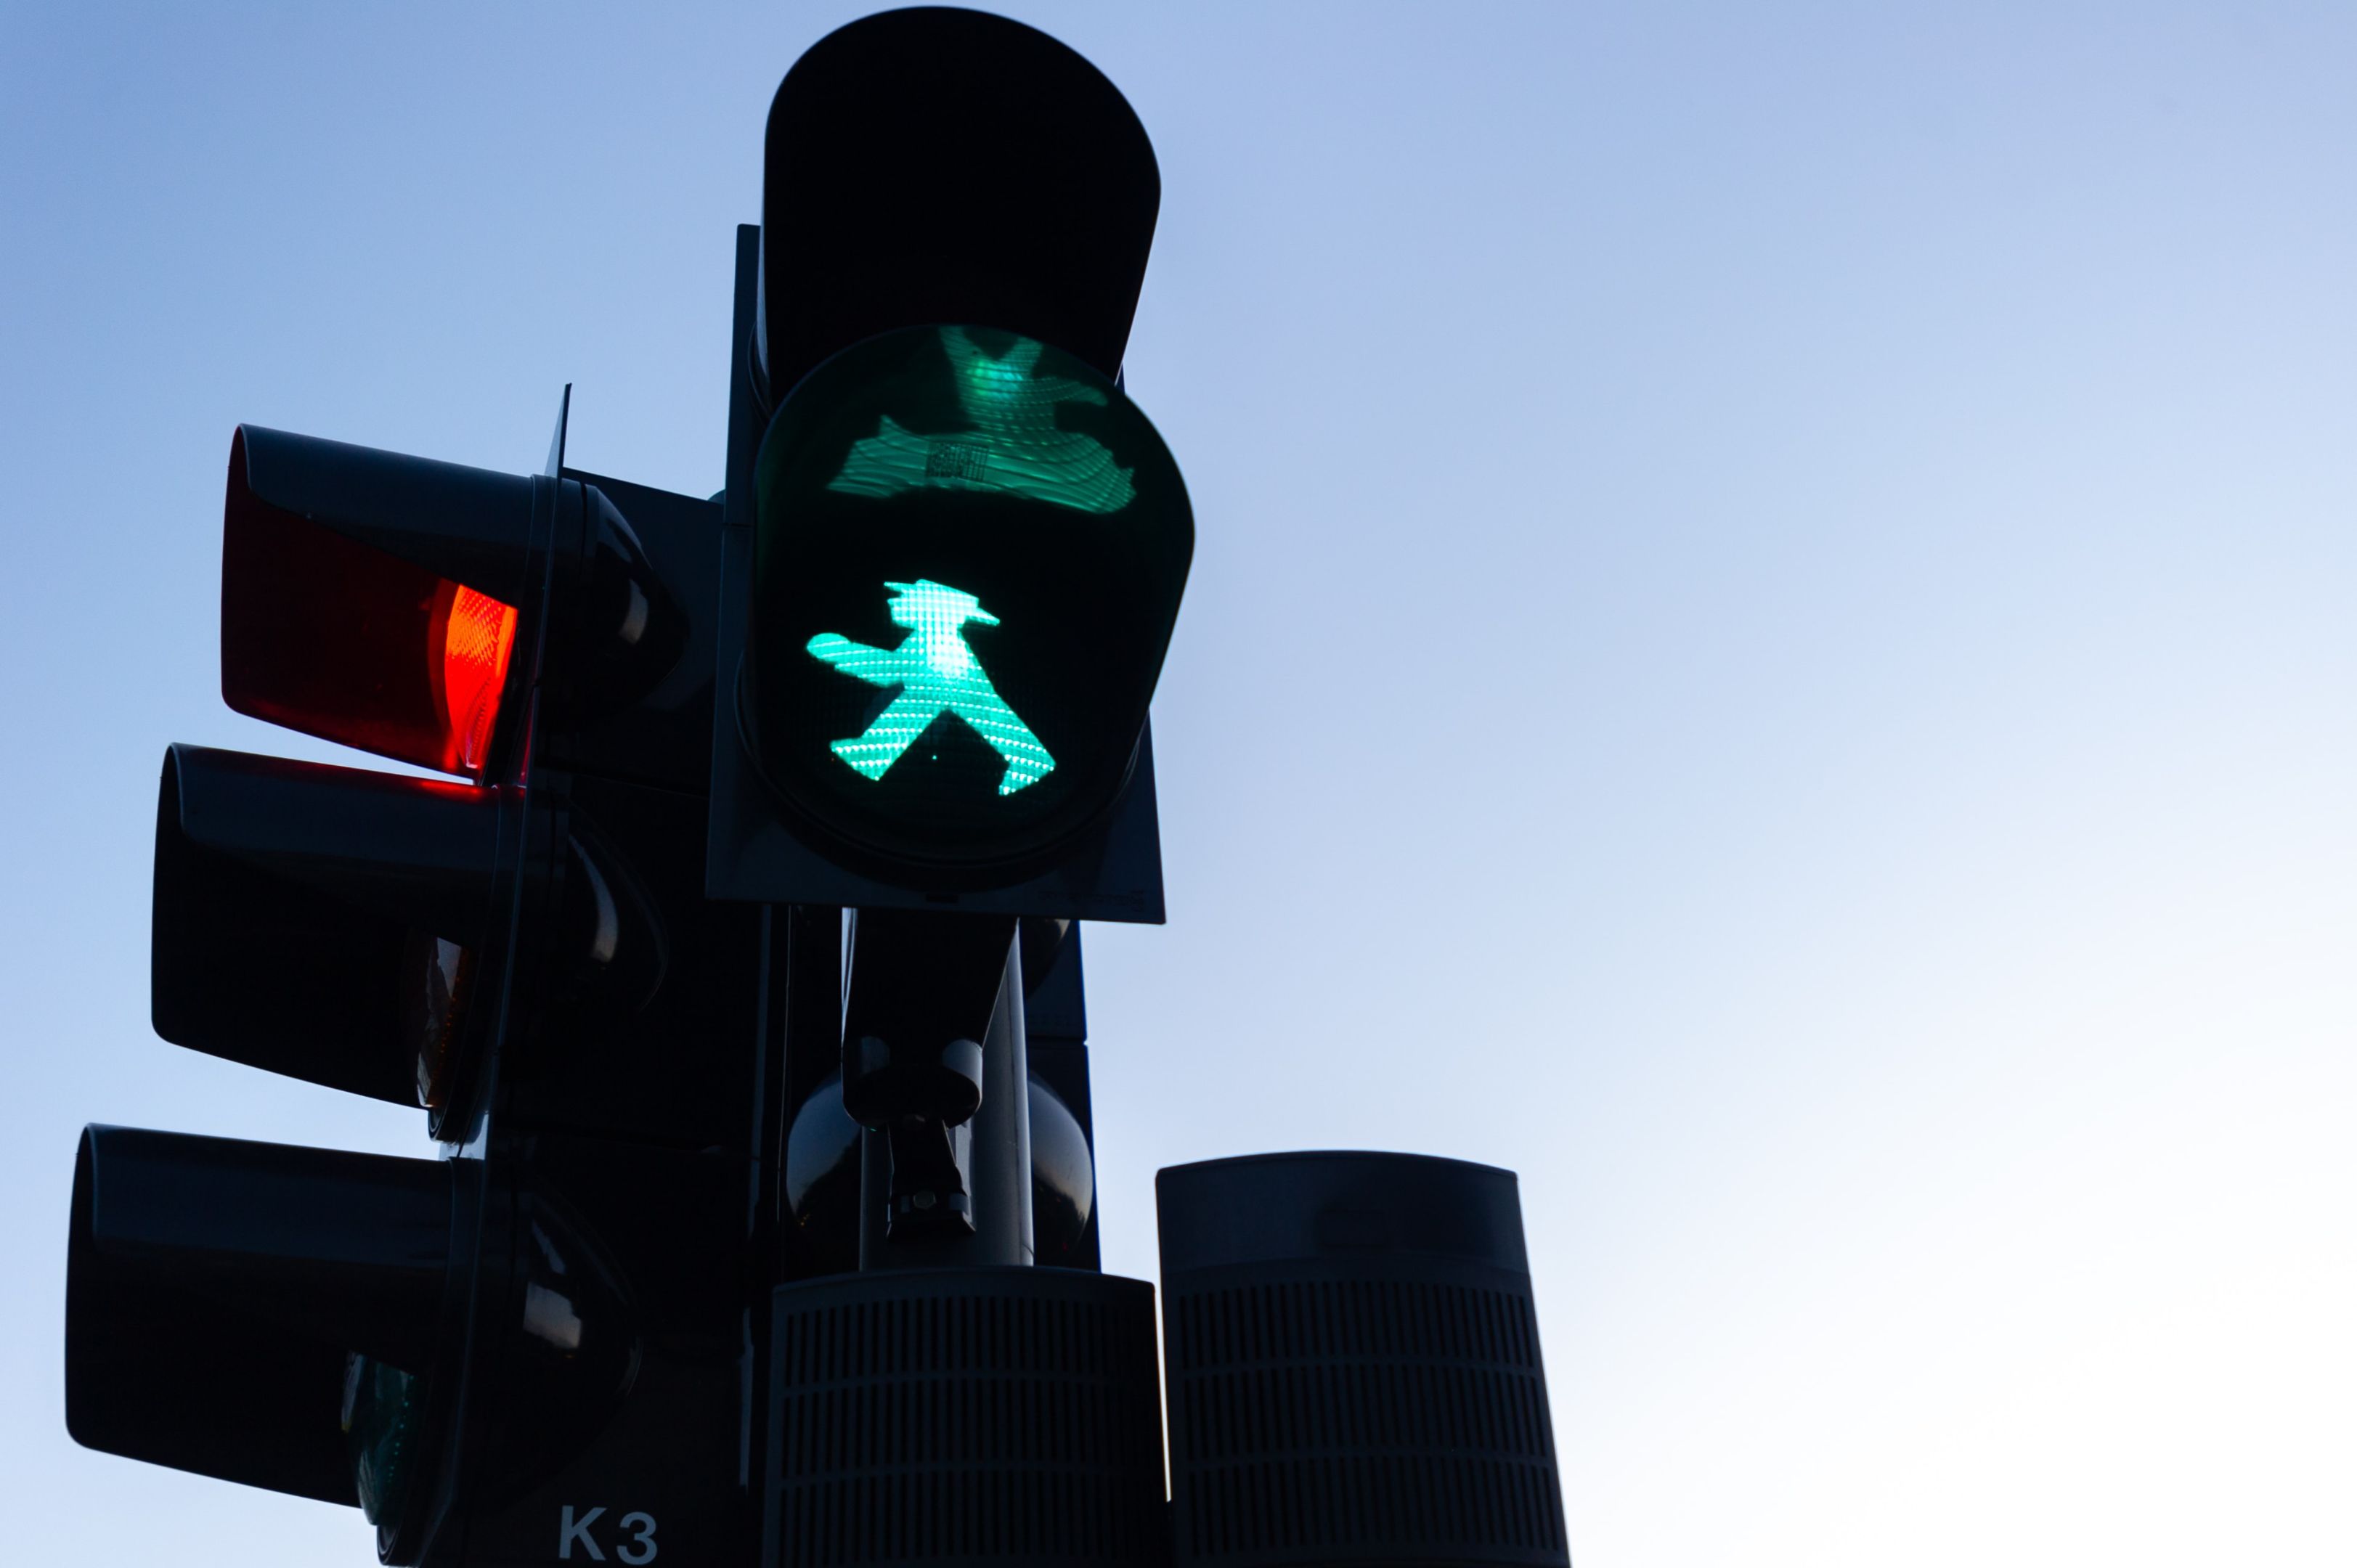 The walk symbol is lit up on a pedestrian crossing traffic light